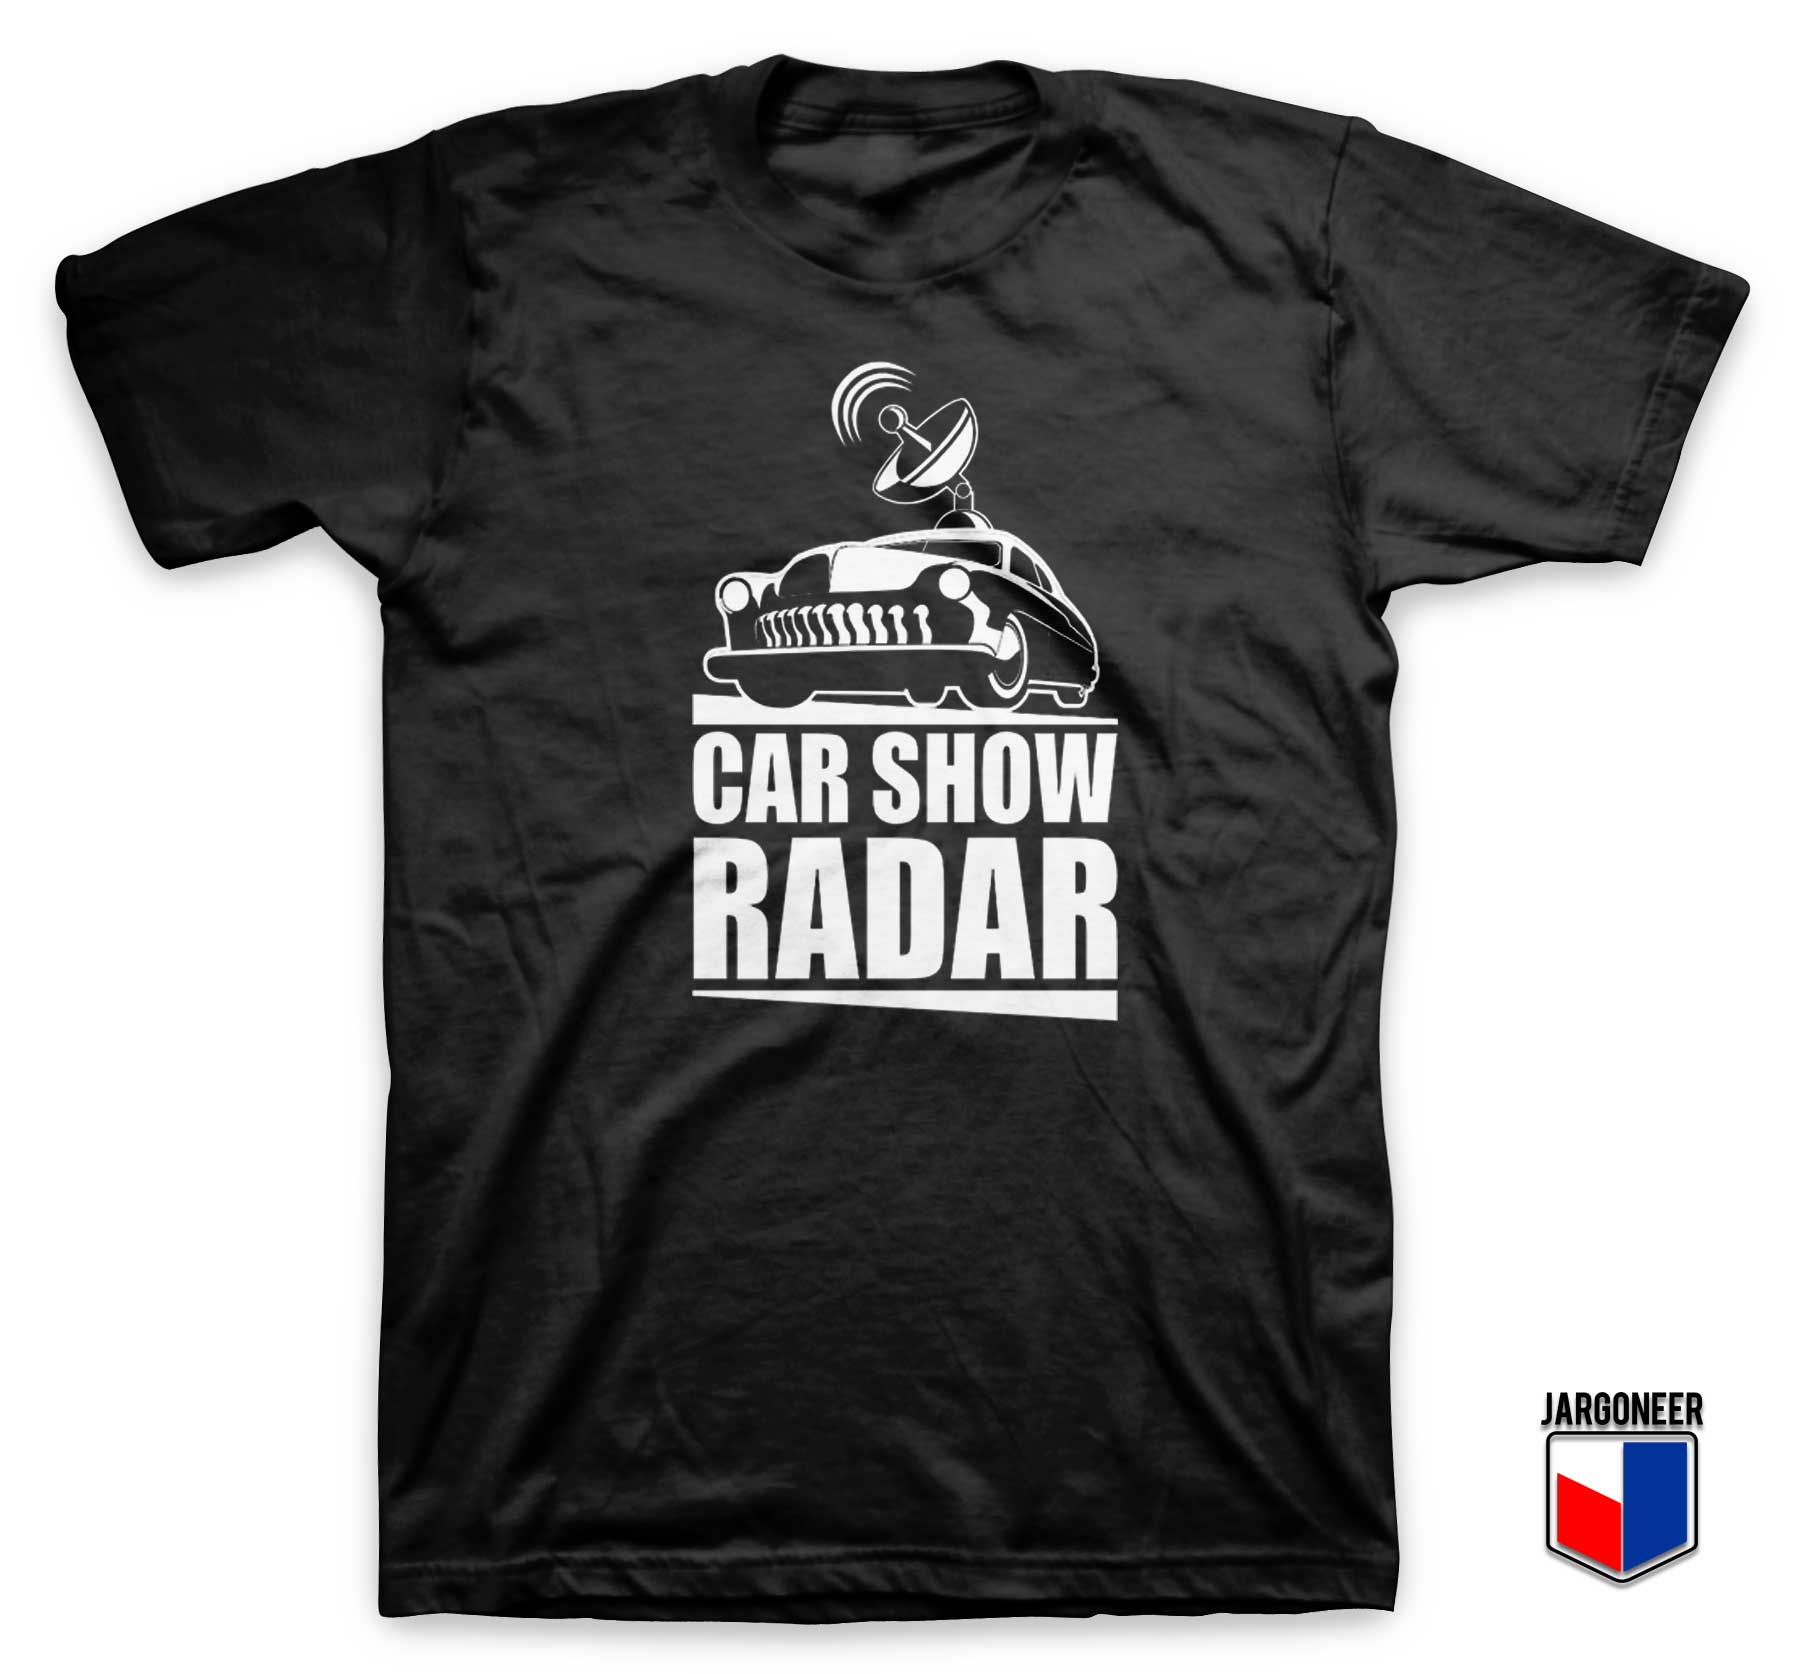 Car Show Radar T Shirt - Shop Unique Graphic Cool Shirt Designs